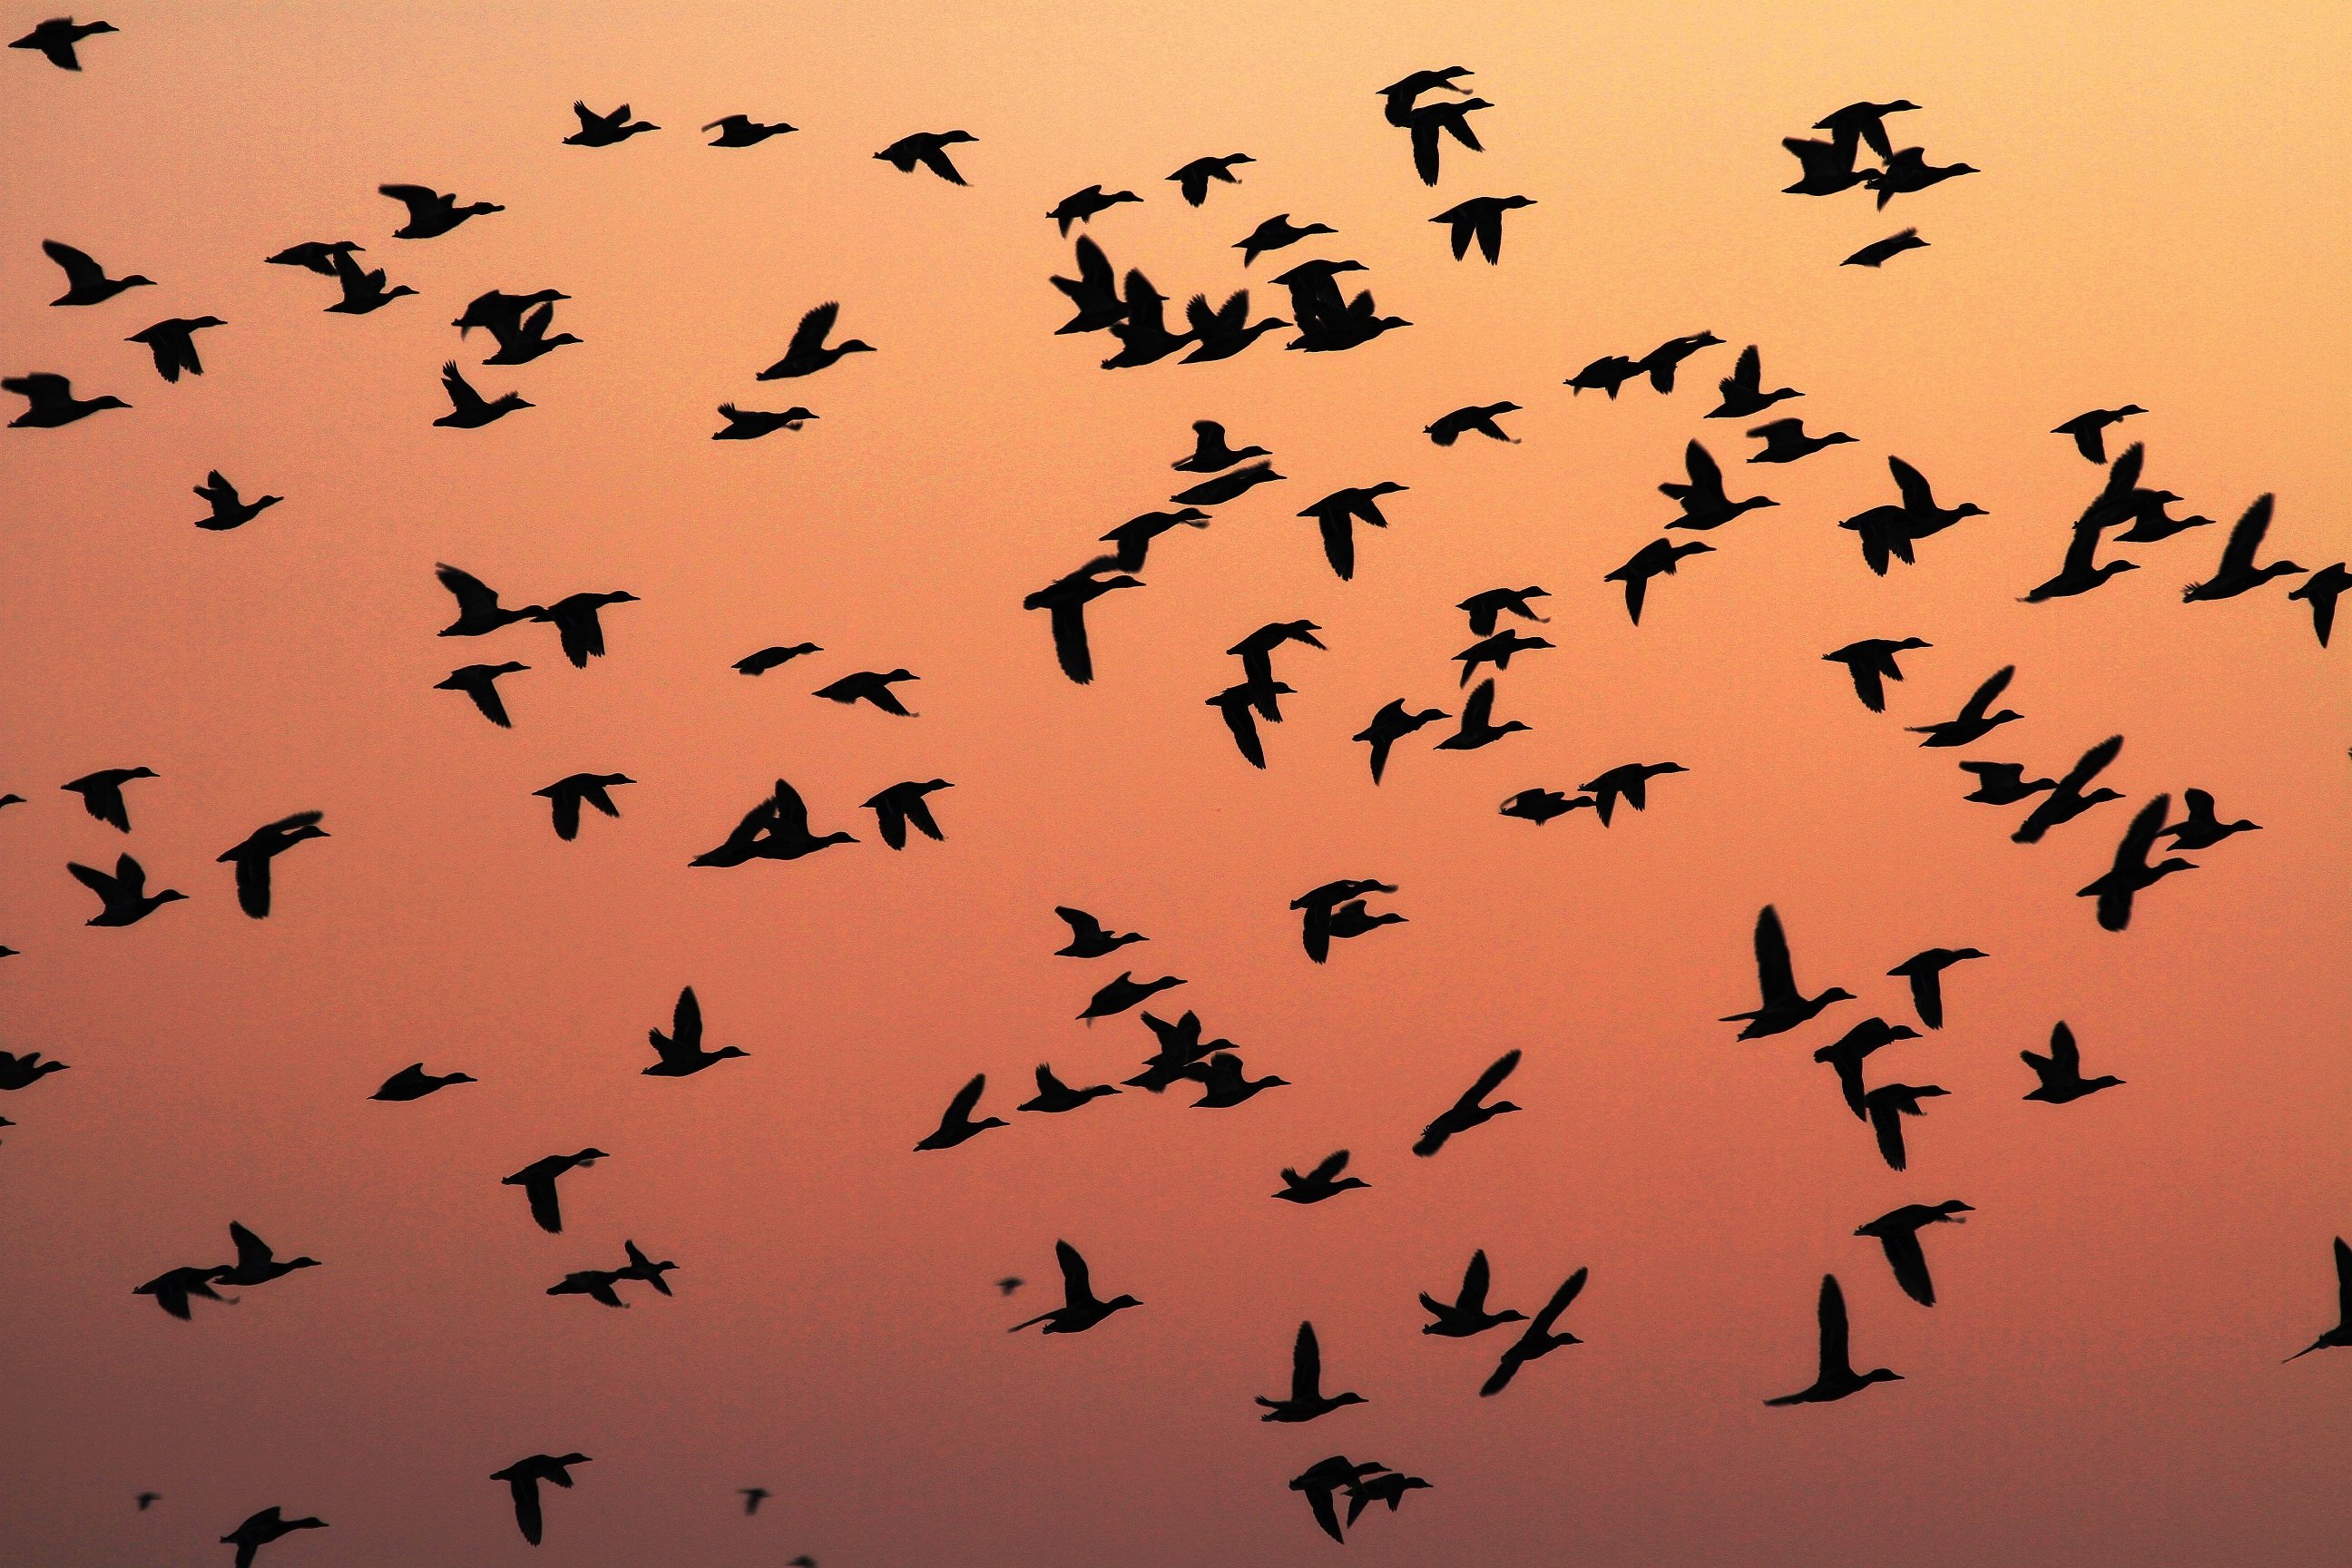 Жизнь мигрирующих птиц. Миграция птиц. Пролёт птиц. Миграция животных и птиц. Мигрирующие птицы.